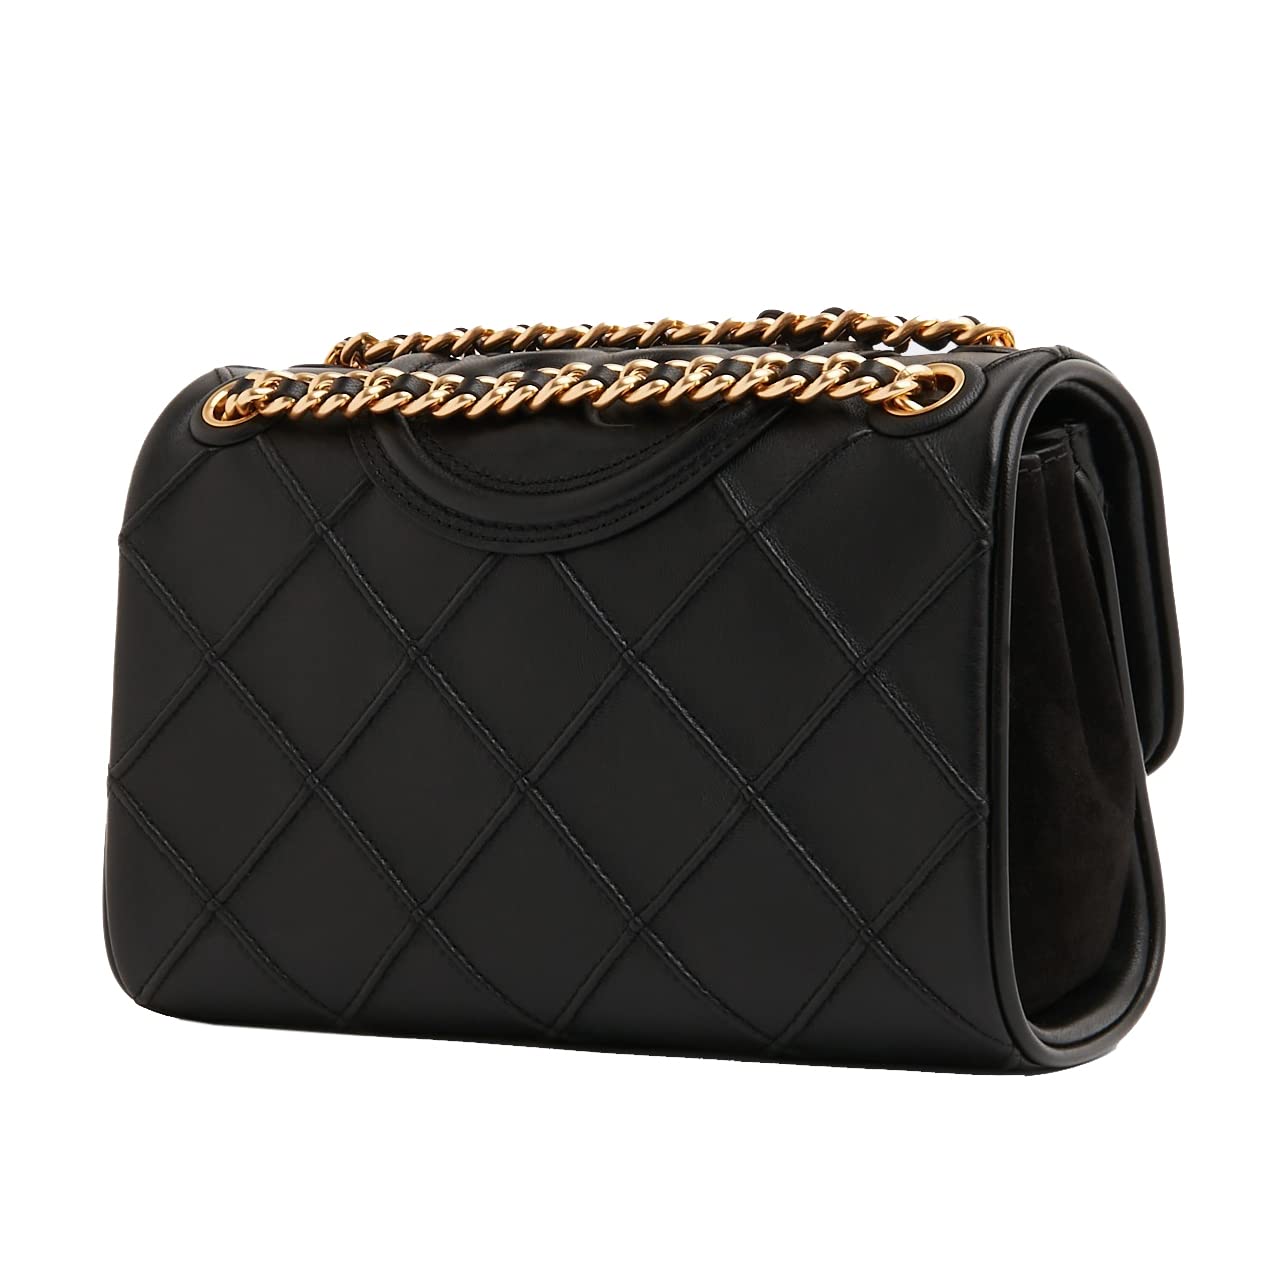 Tory Burch Women's Black Leather Small Fleming Soft Convertible Shoulder Handbag